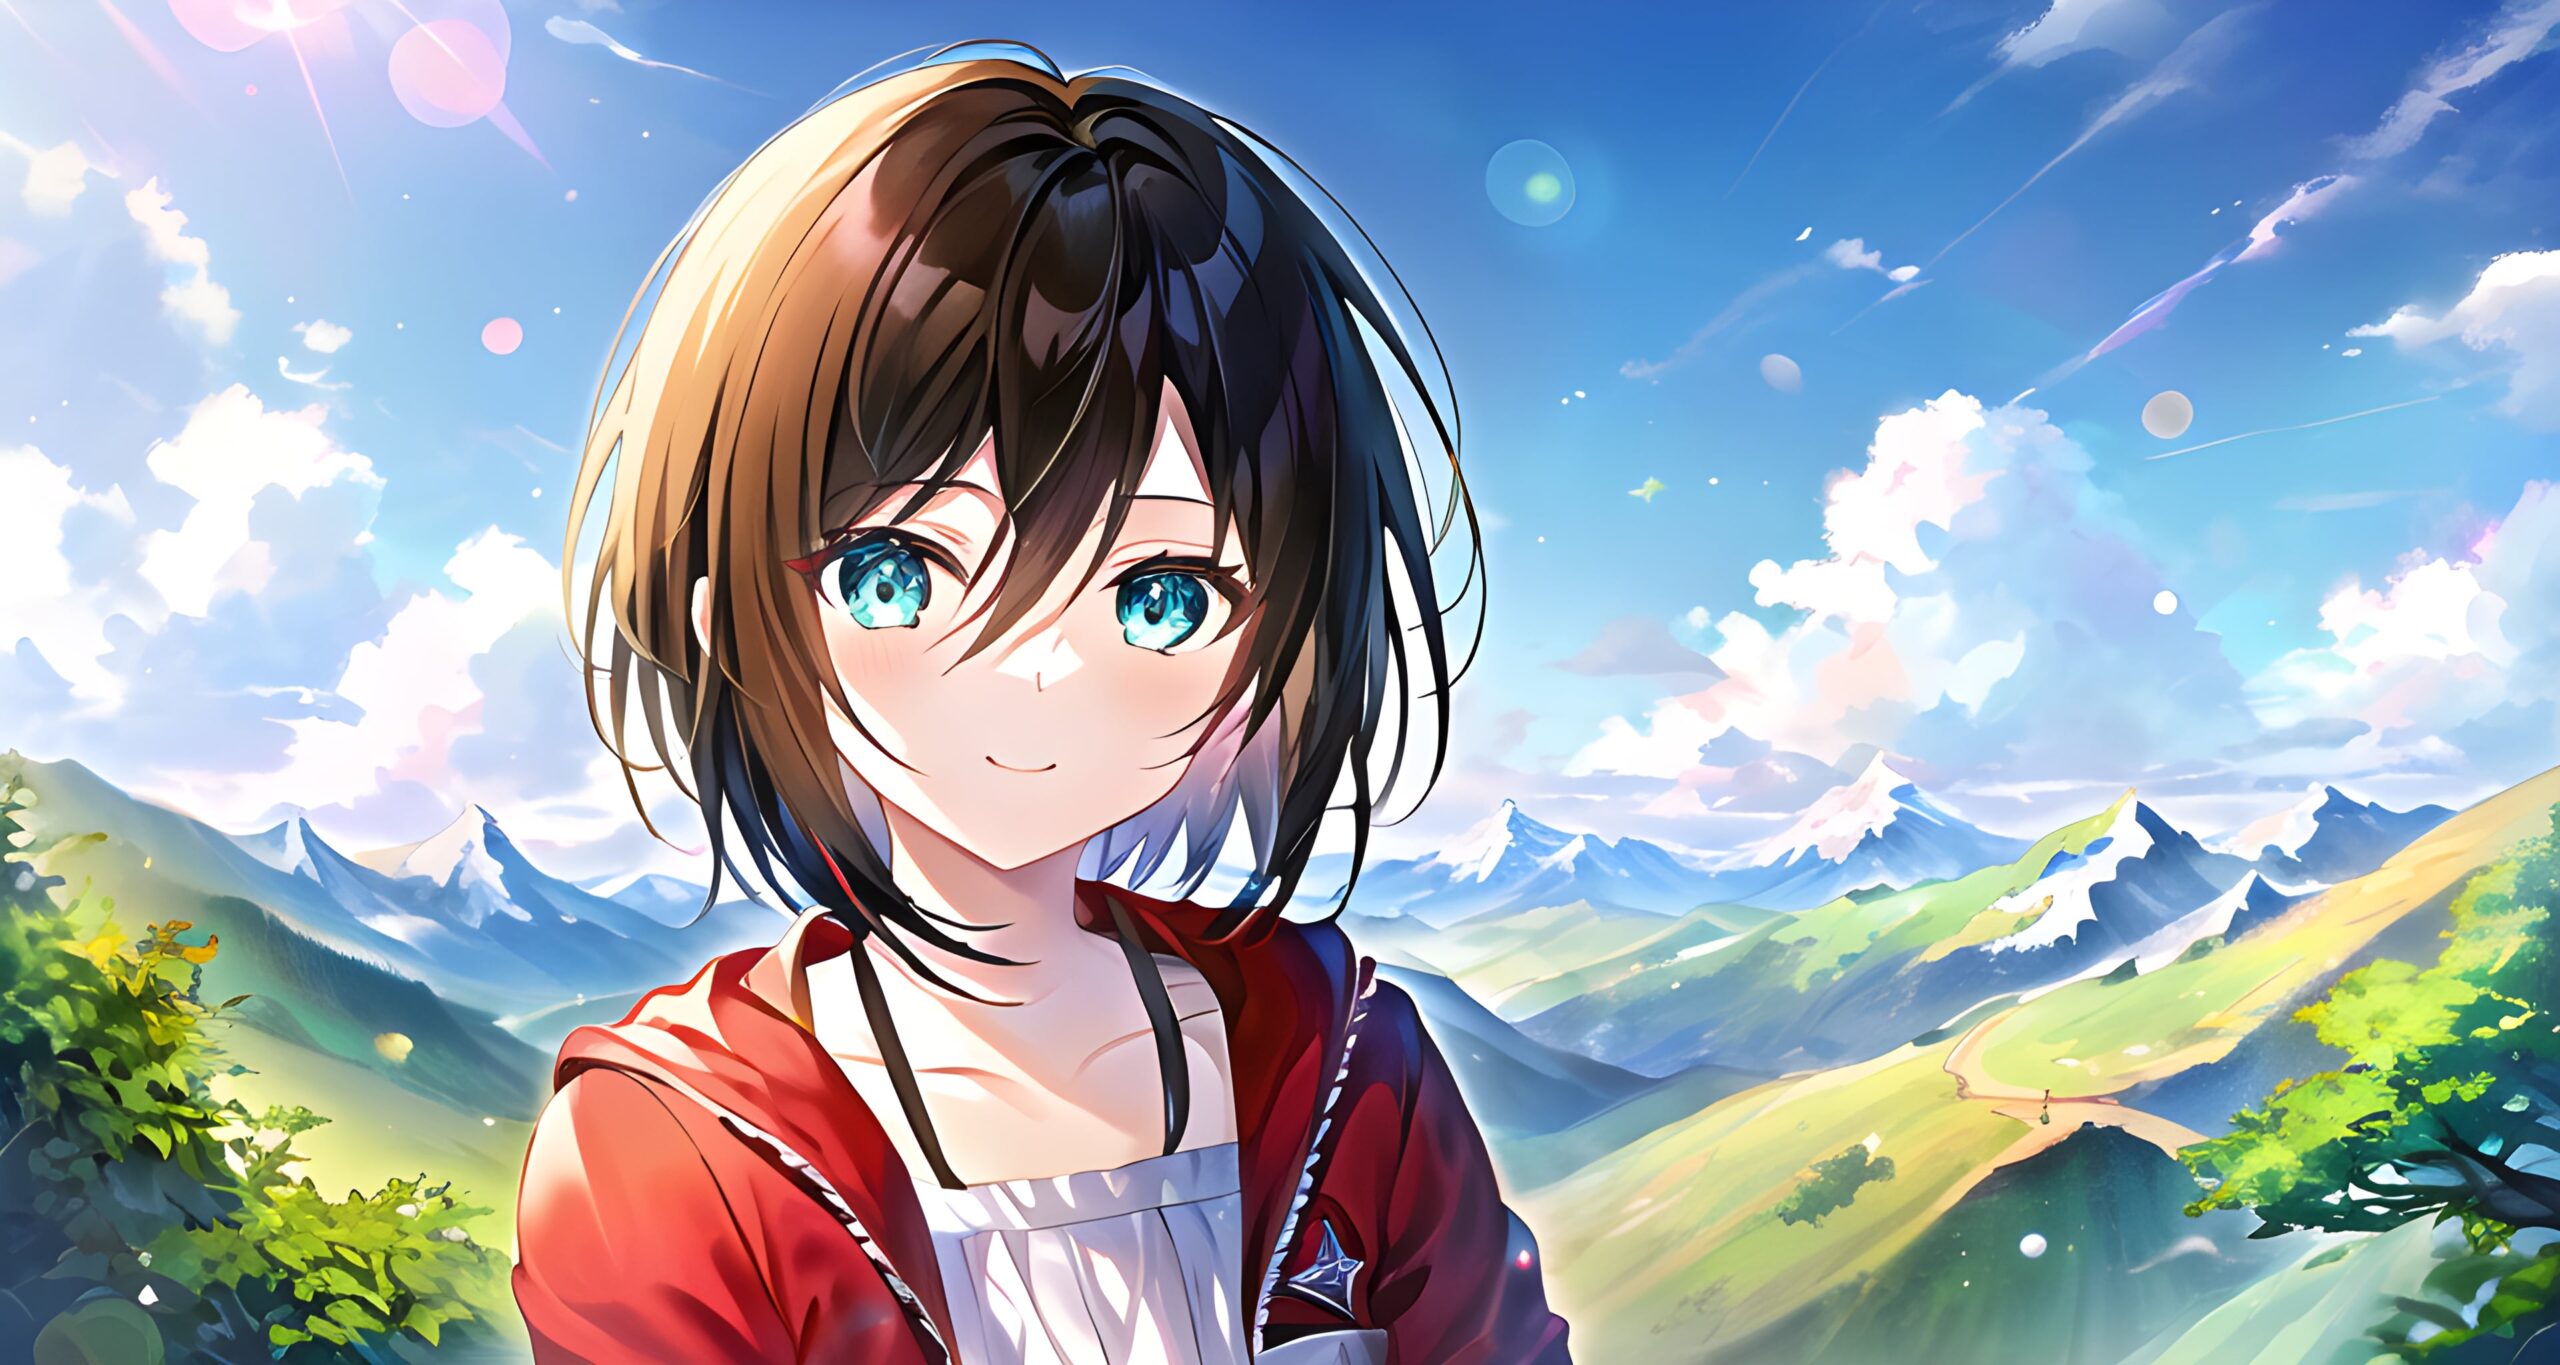 Mikasa in the Mountains